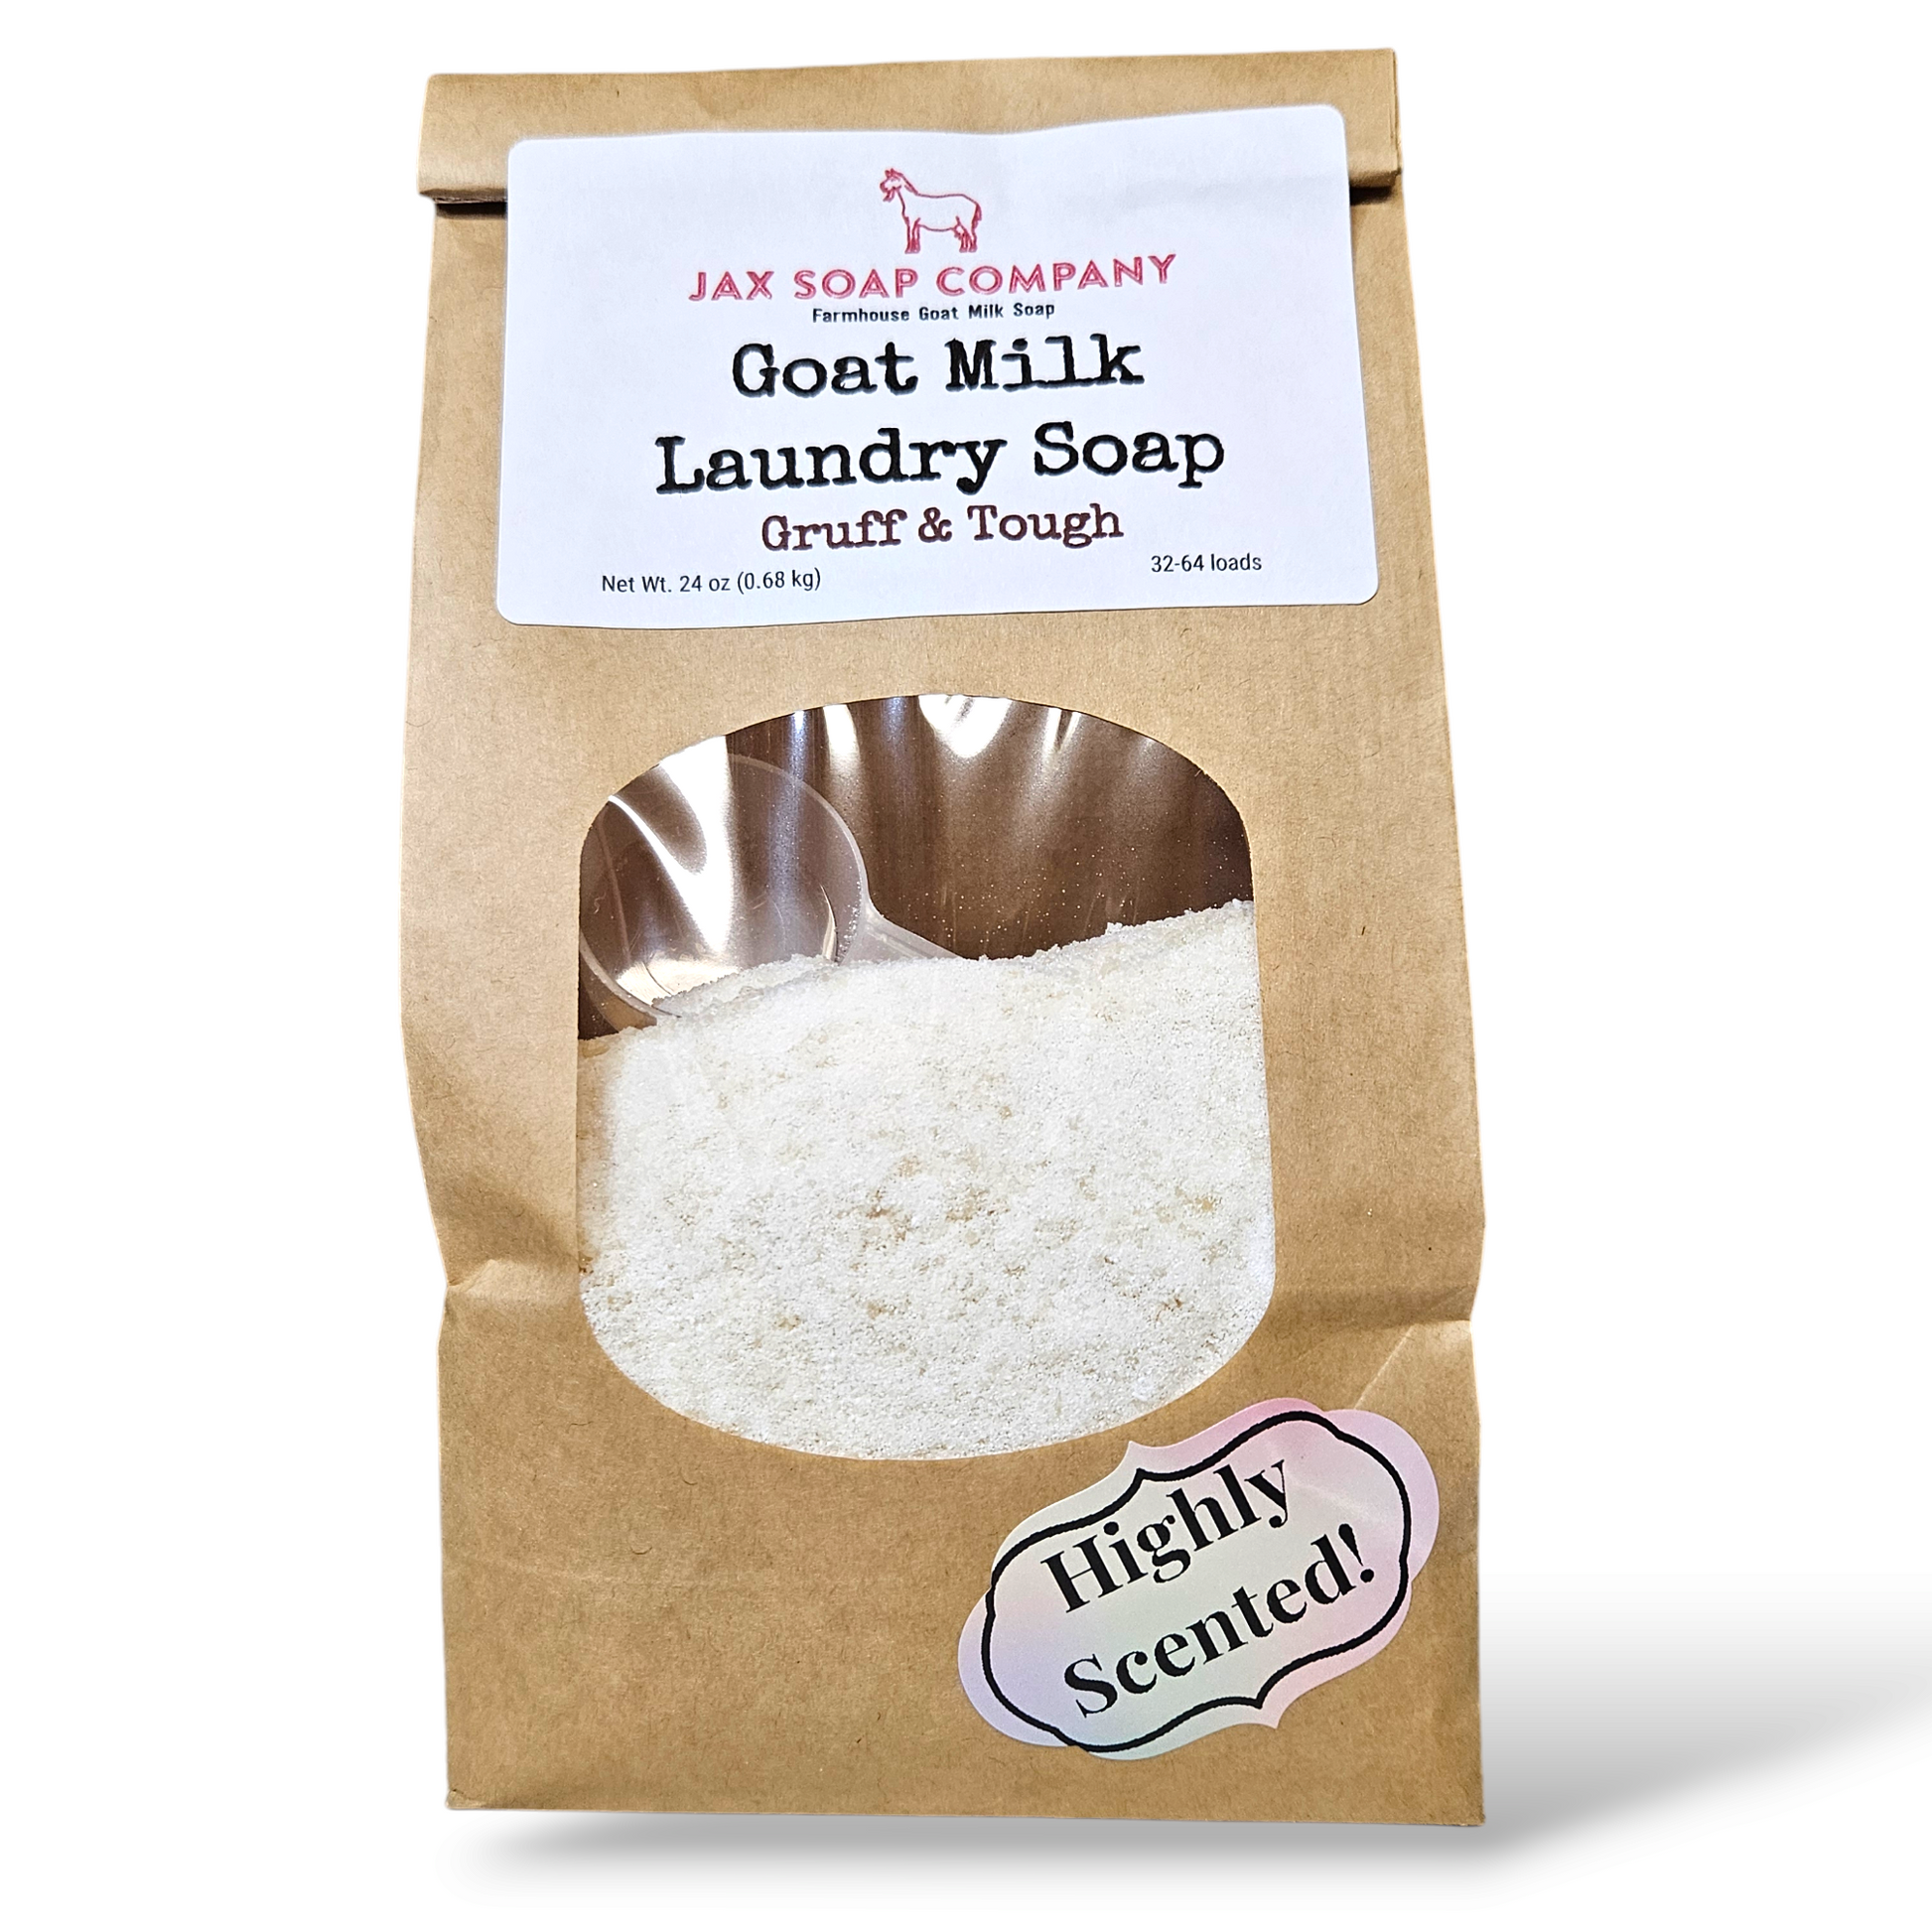 Goat Milk Laundry Soap  Jax Soap Company Gruff & Tough  